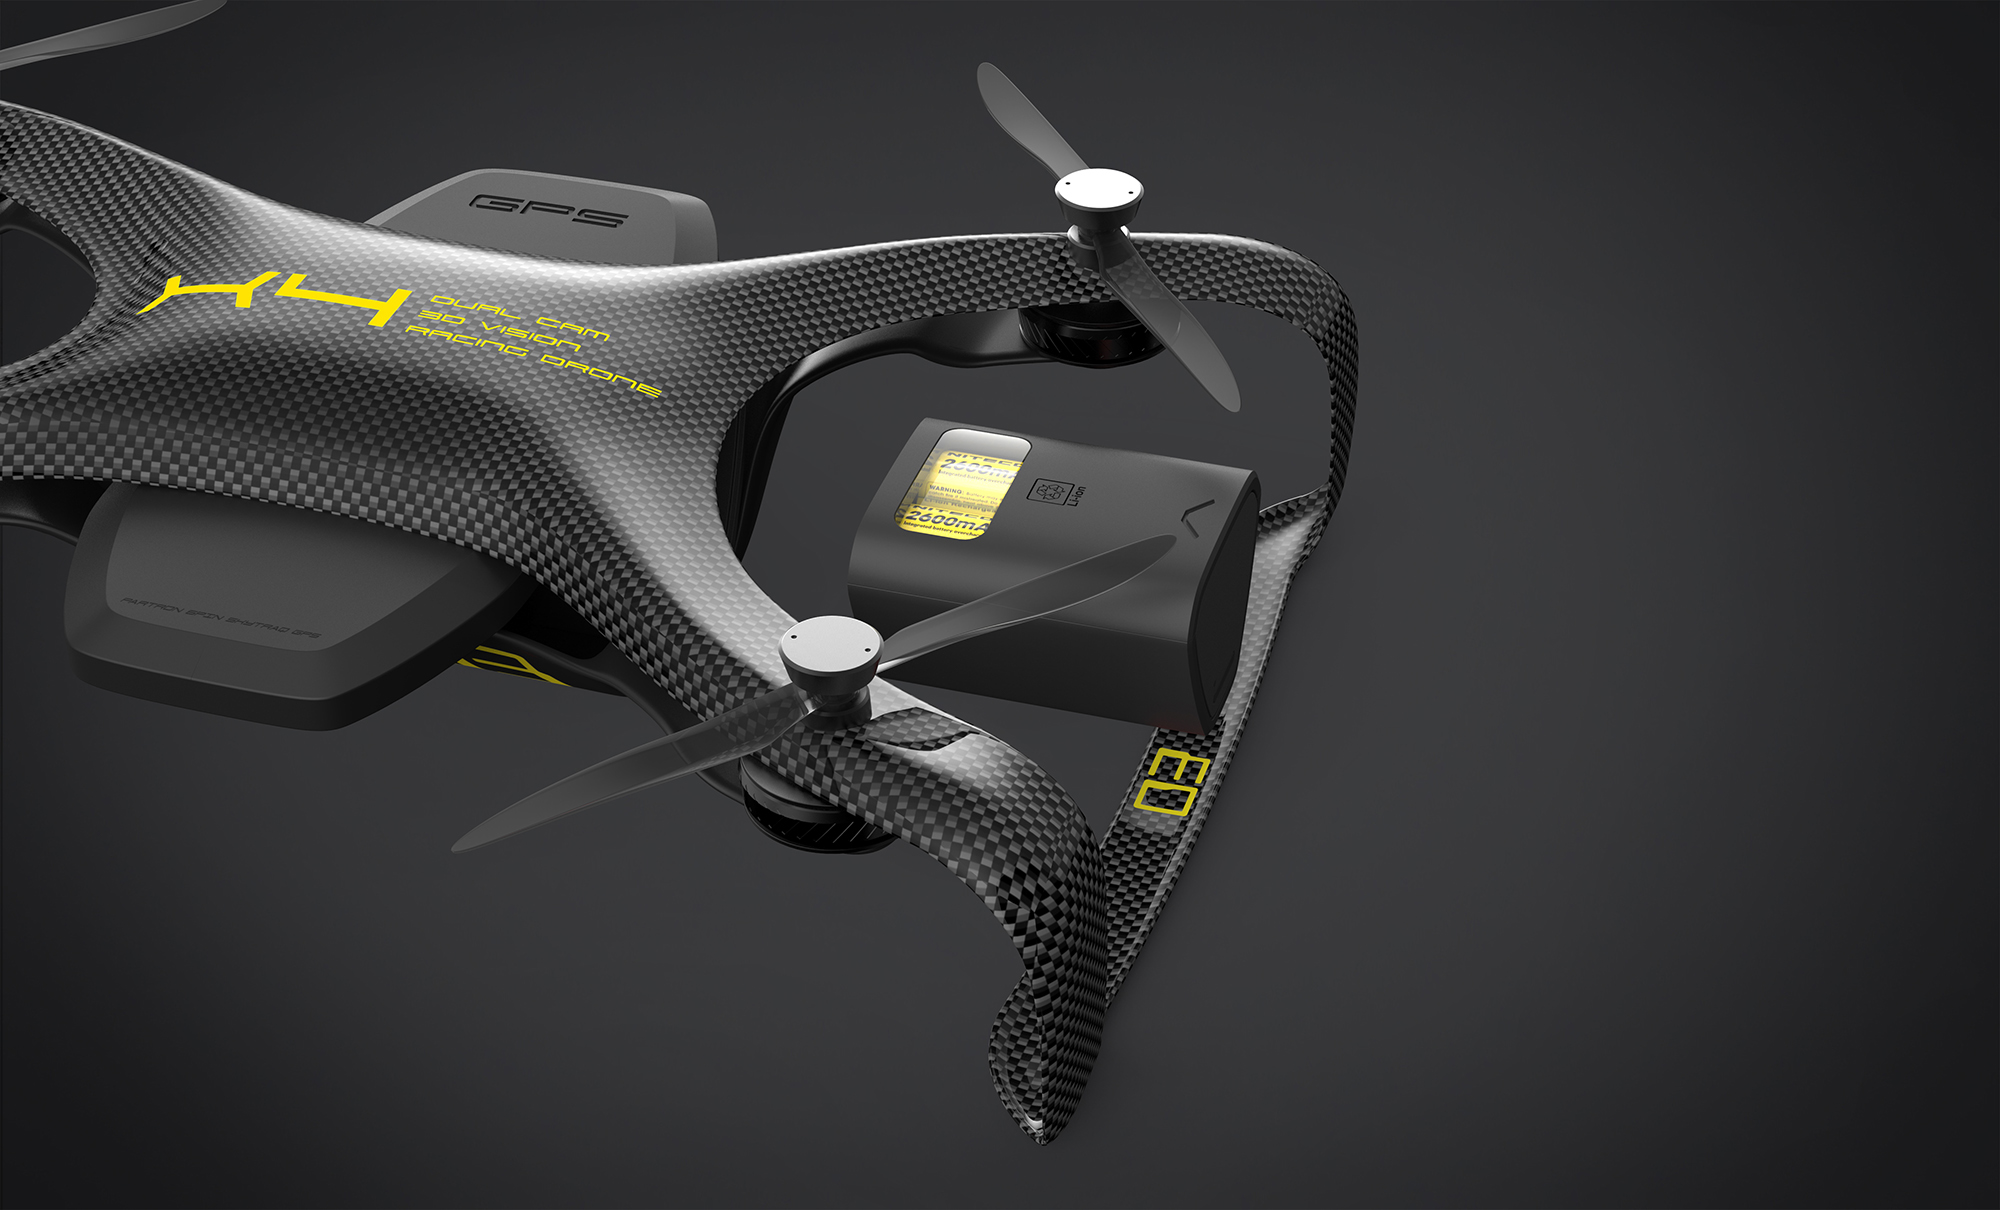 Vgn f1 pro max x dark project. NEPDESIGN Racing Drone 2016. Беспилотник дизайн. Дрон дизайн. Необычные дроны.